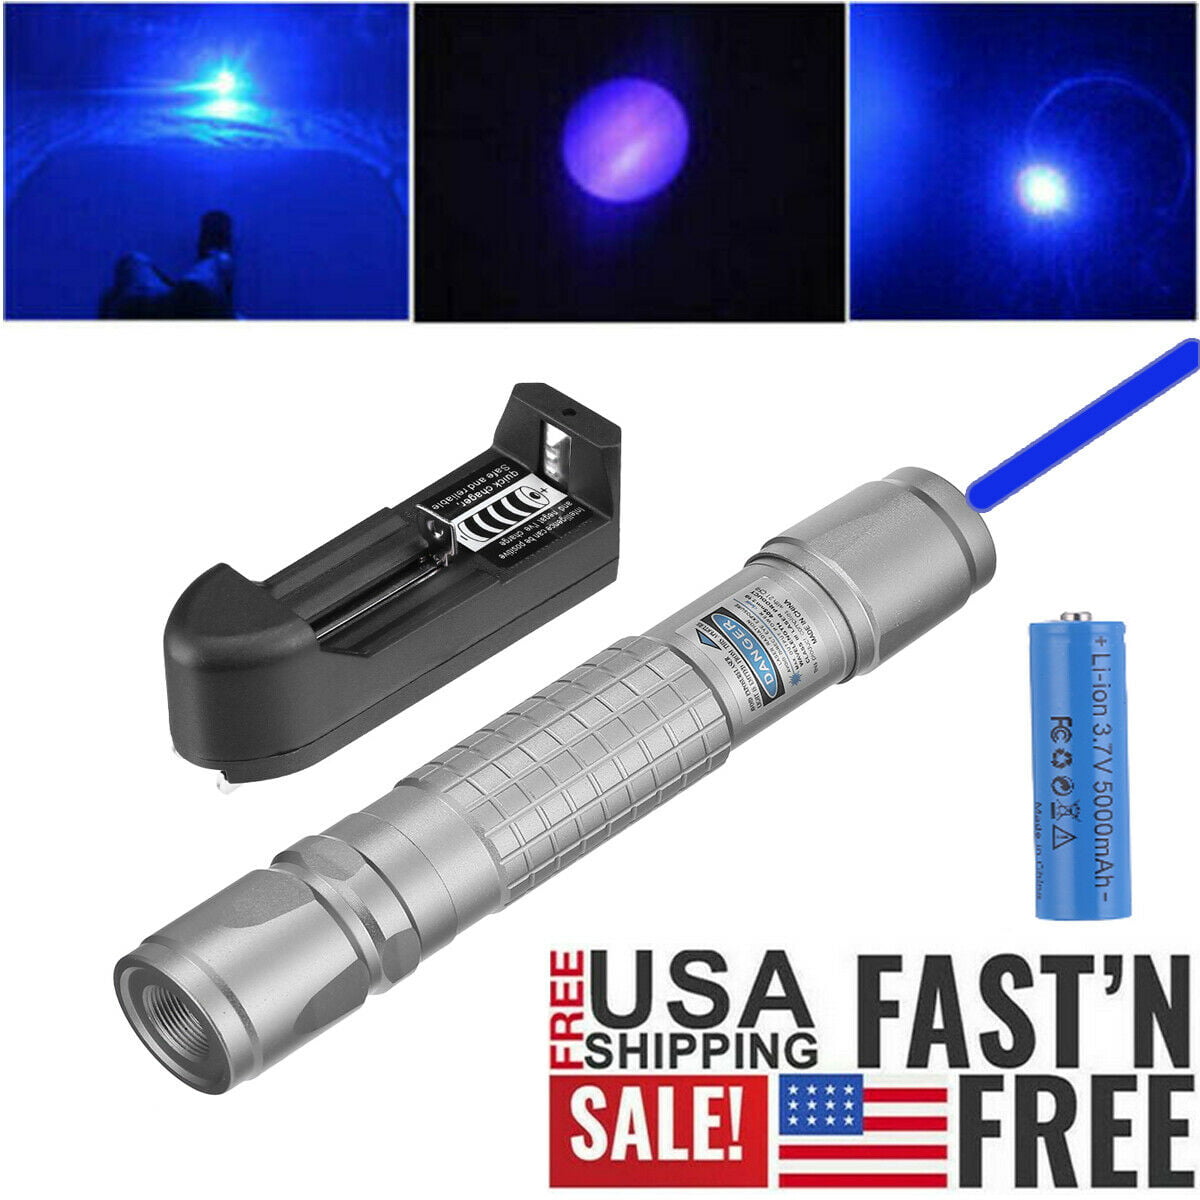 Lila Laser Pen Pointer Lazer Einstellbarer Fokus Sichtbarer Strahl 301 405 nm 